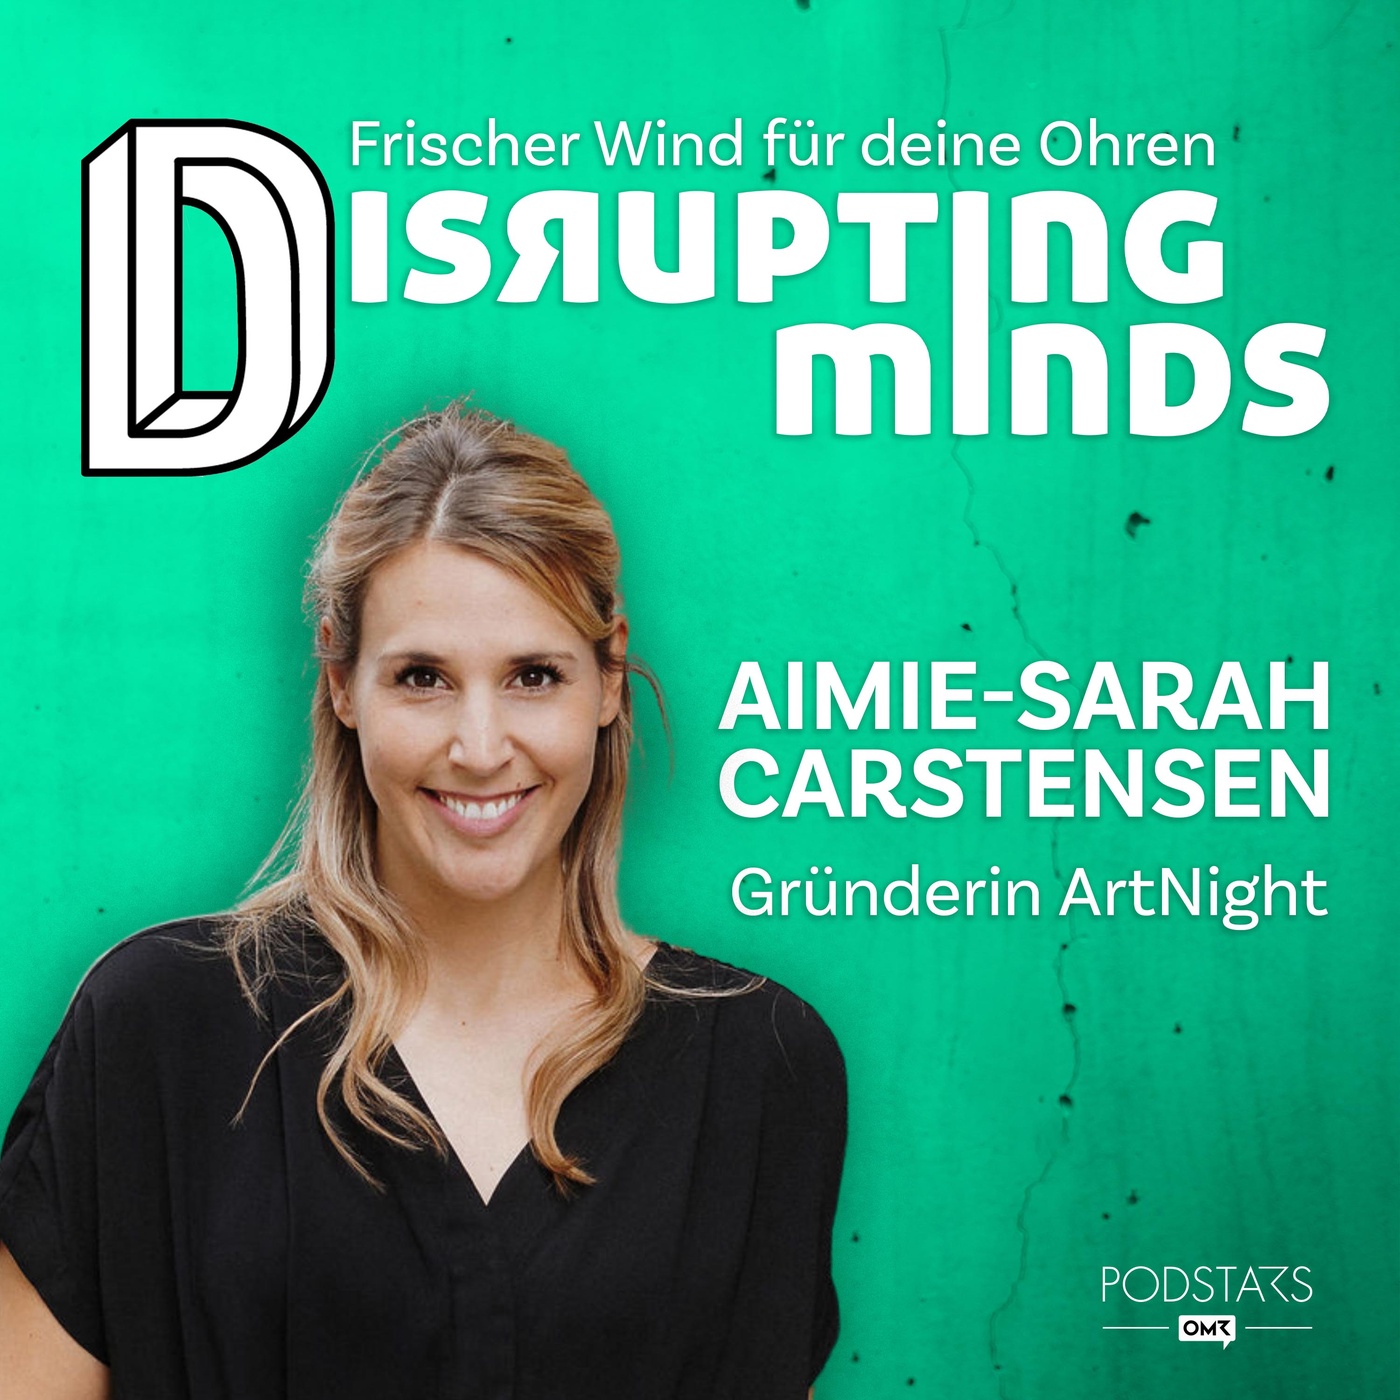 #20 mit ArtNight Gründerin Aimie-Sarah Carstensen